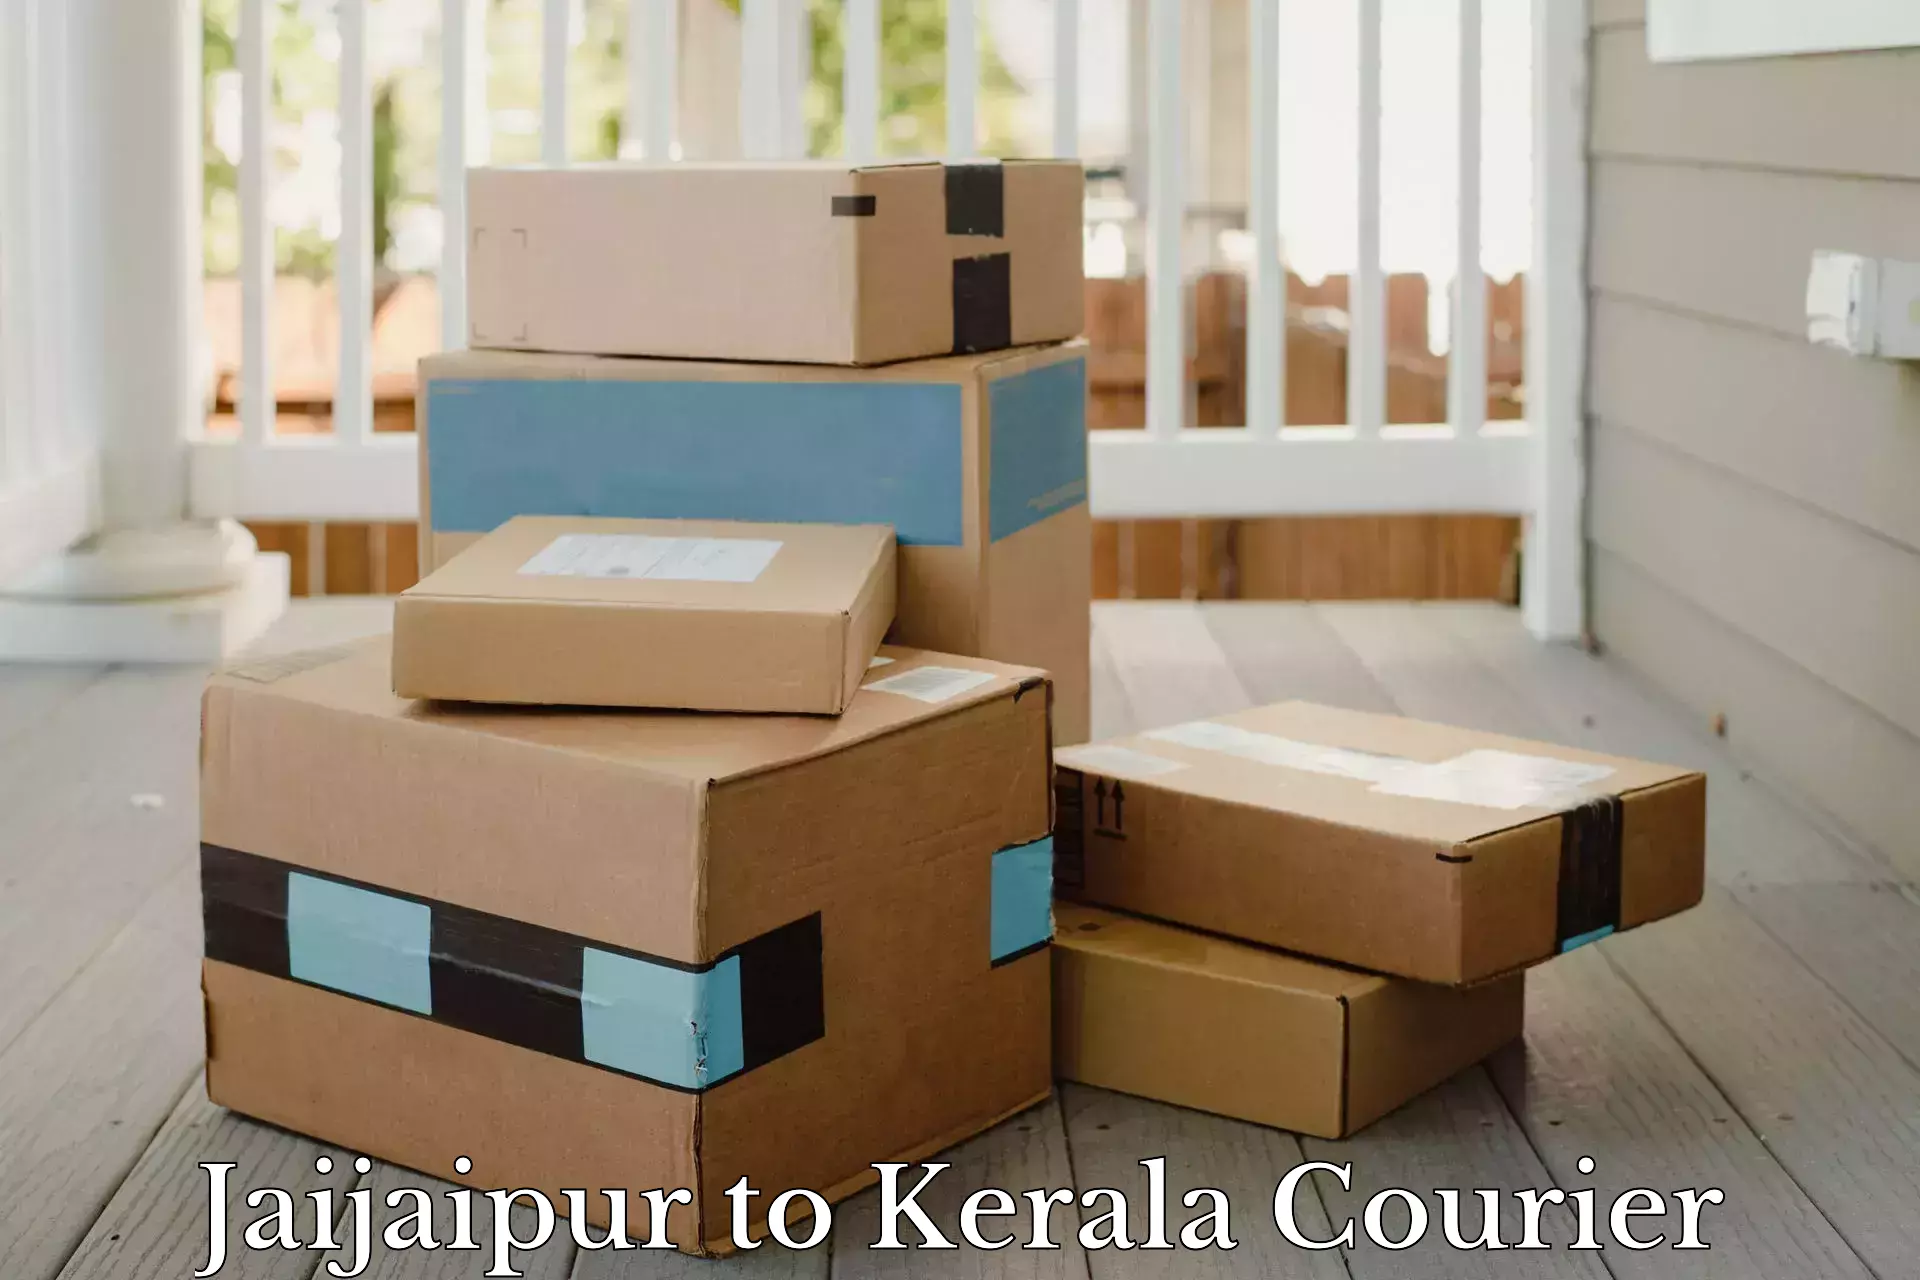 Logistics service provider Jaijaipur to Cochin Port Kochi